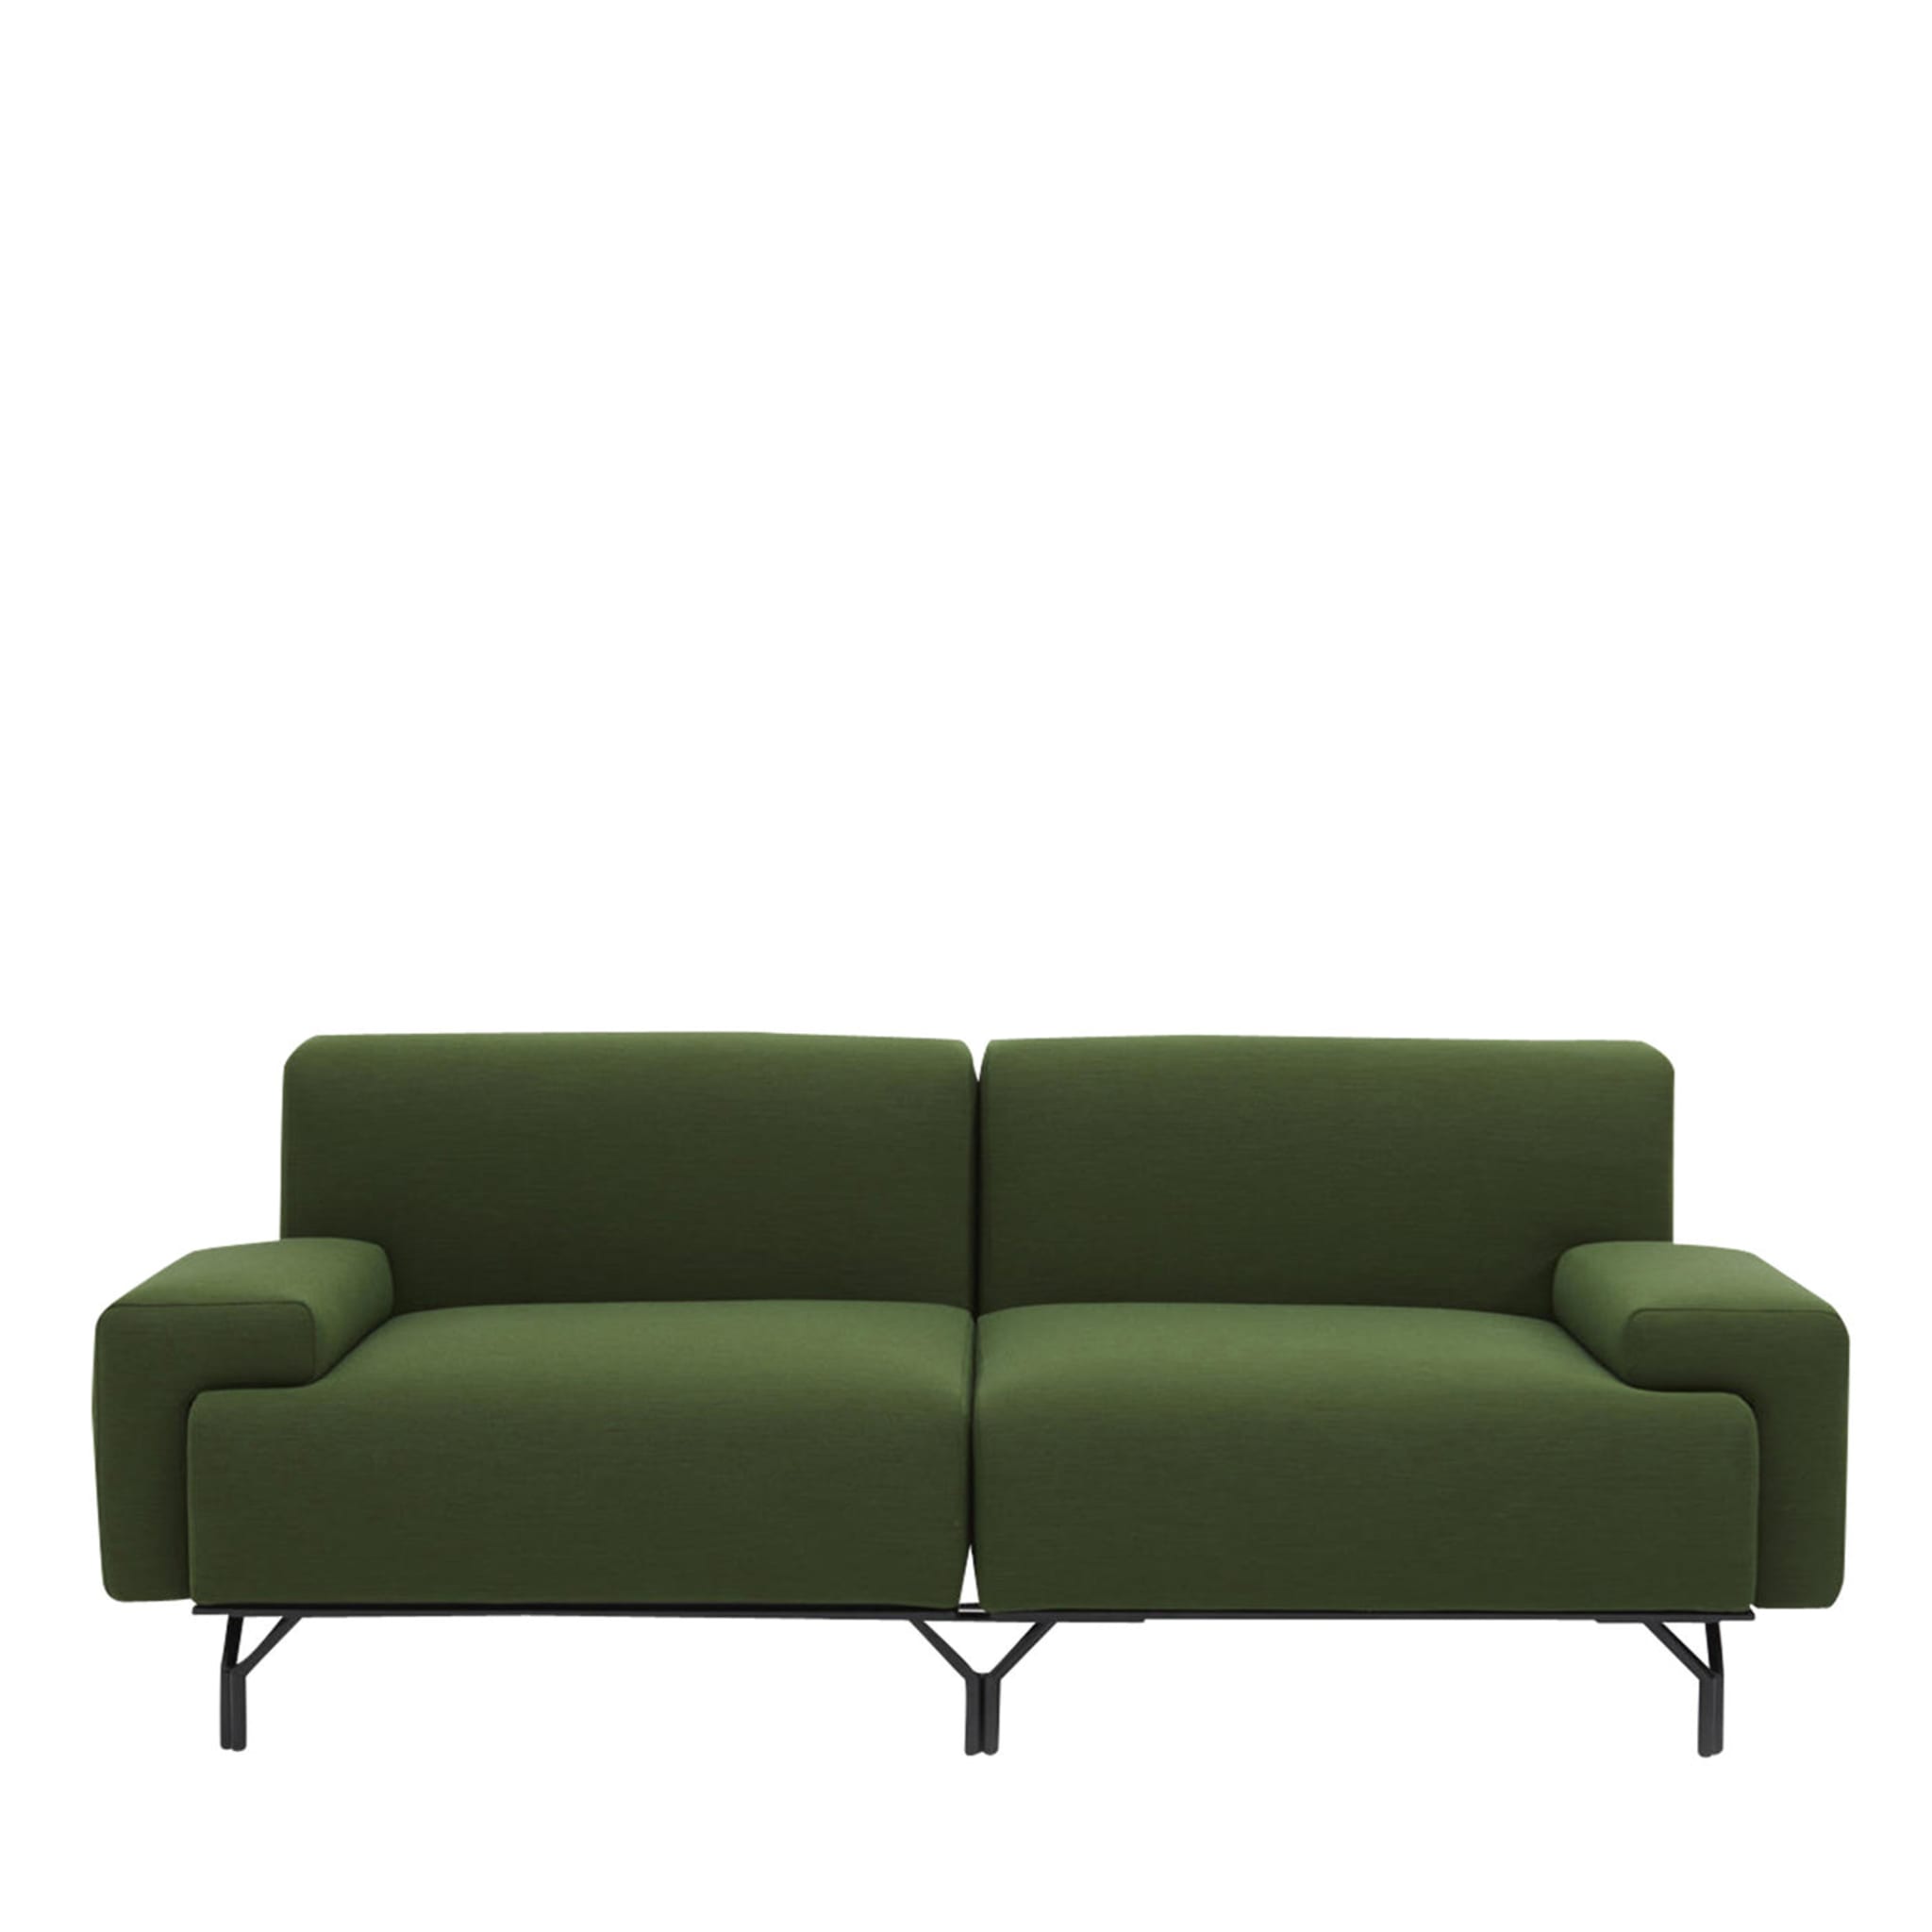 Summit Green 2-Seater Sofa by Giulio Iacchetti - Main view